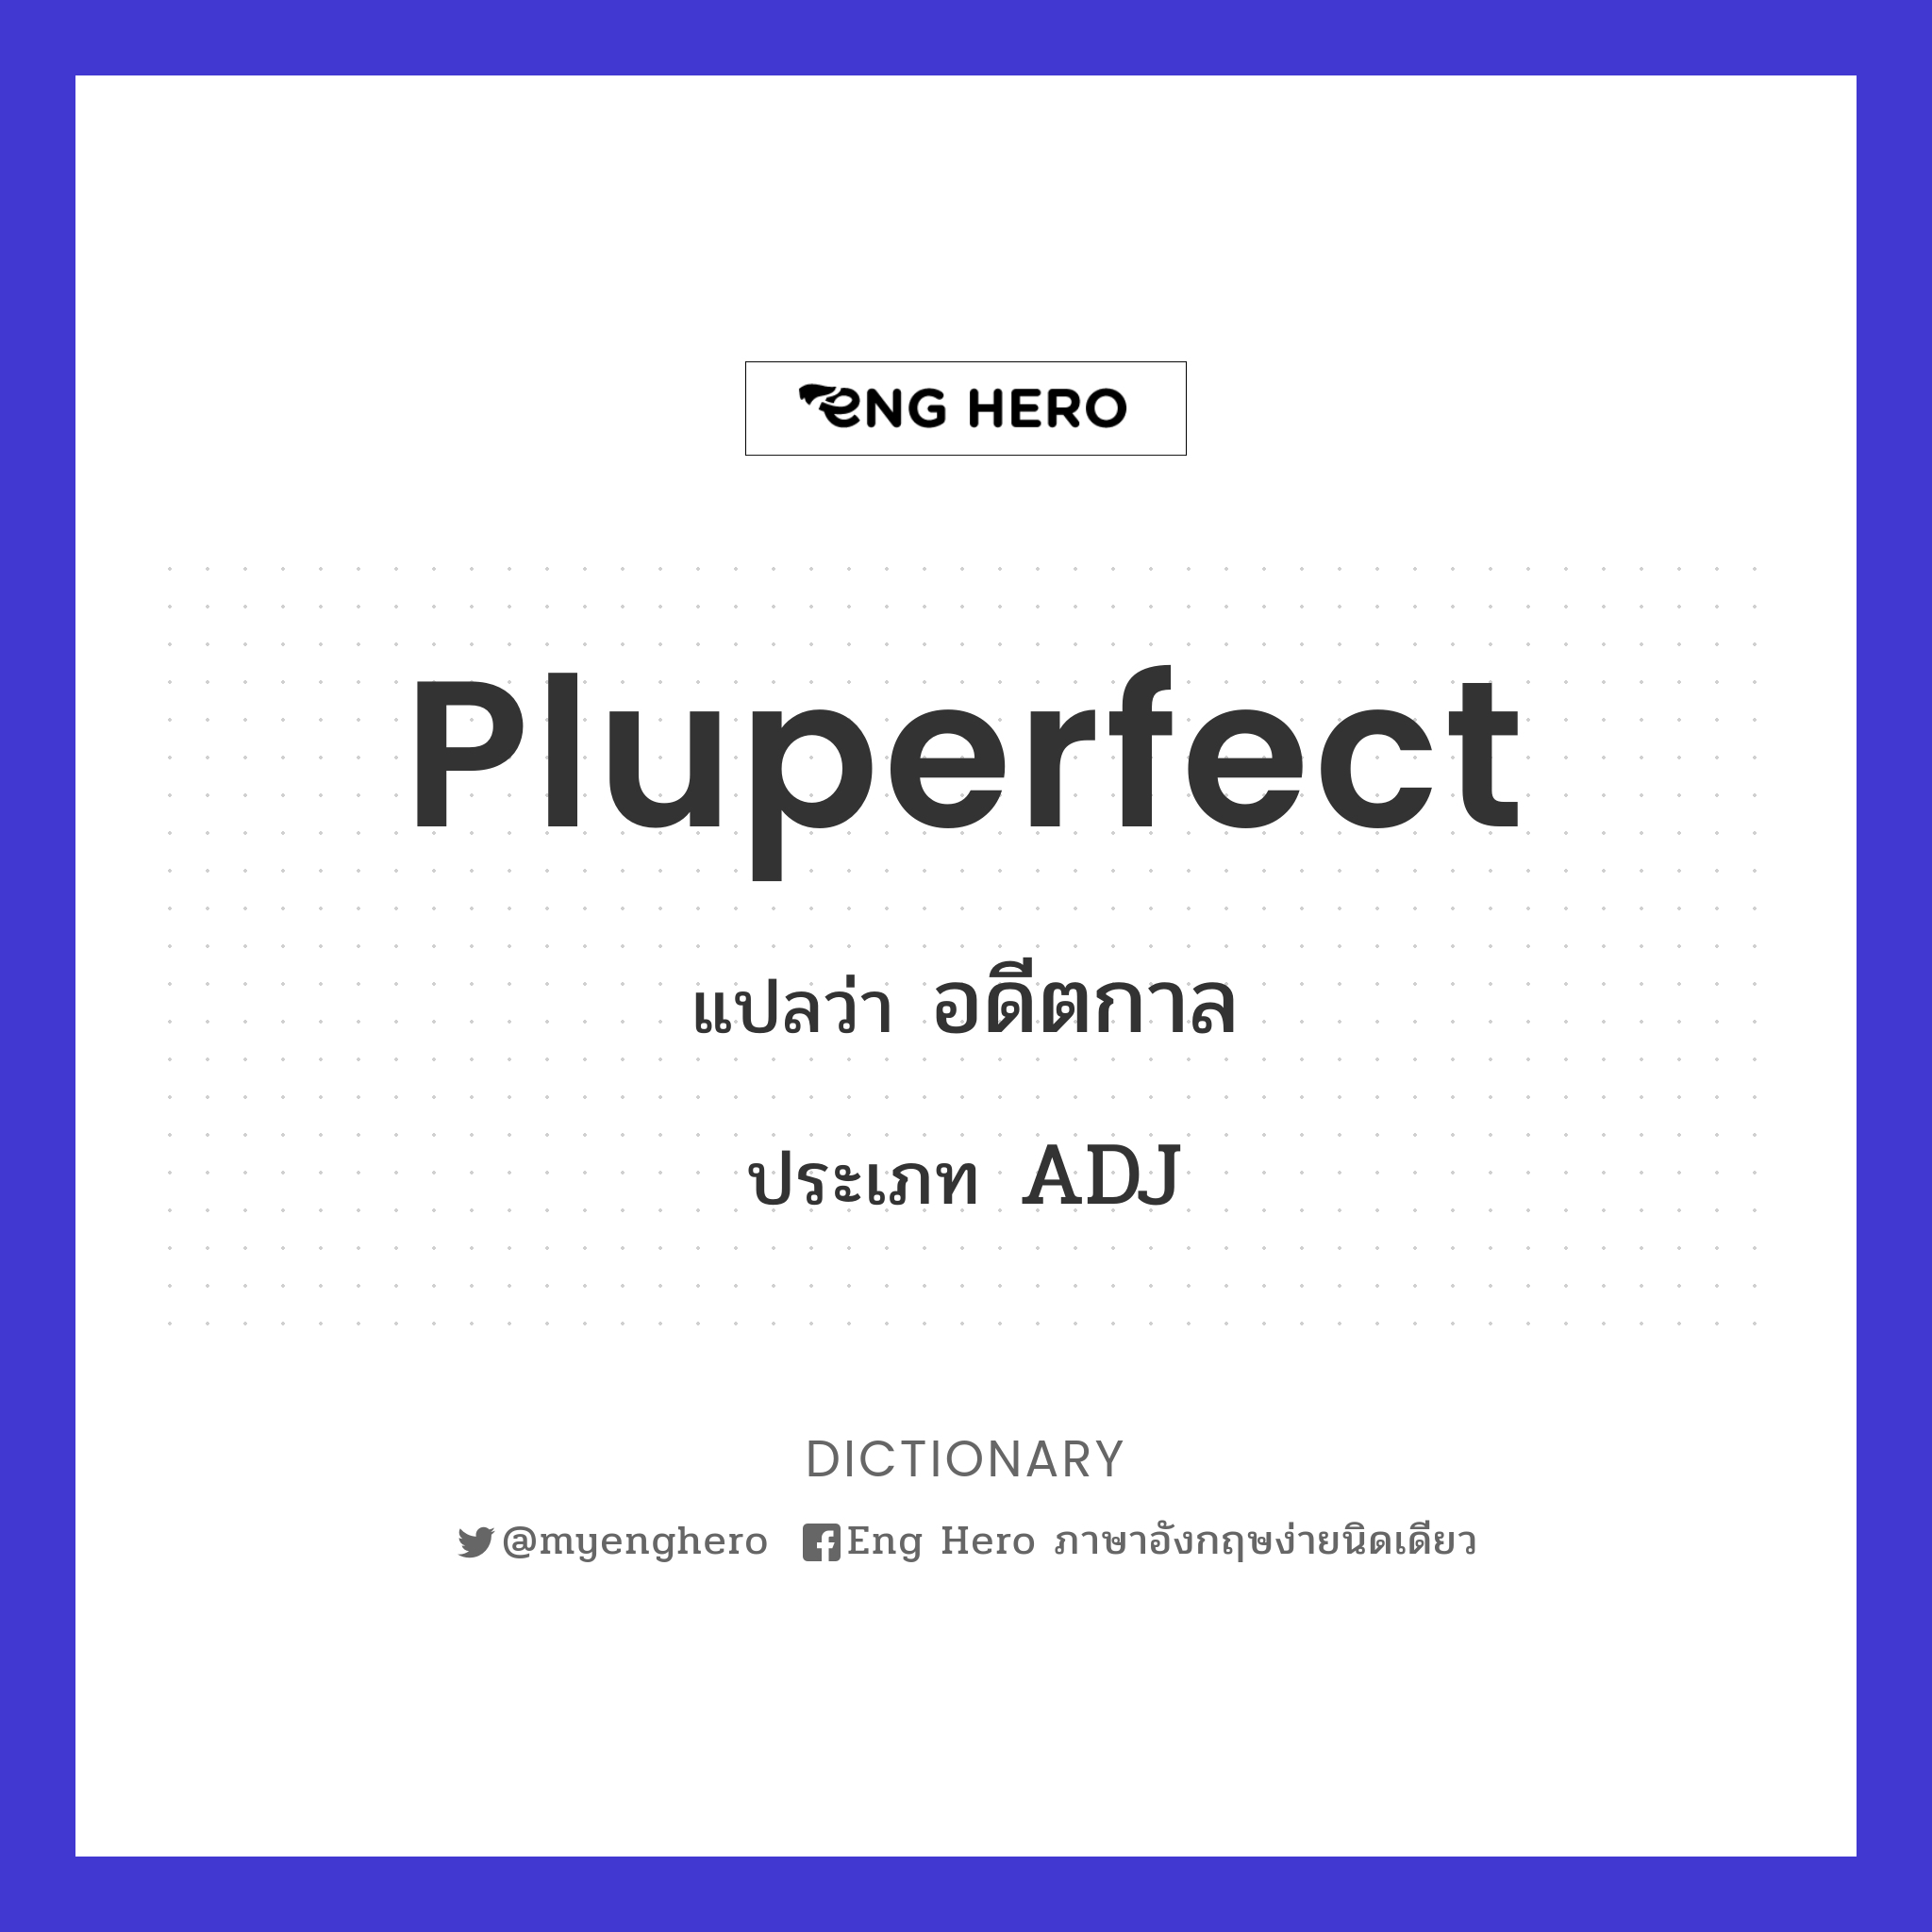 pluperfect